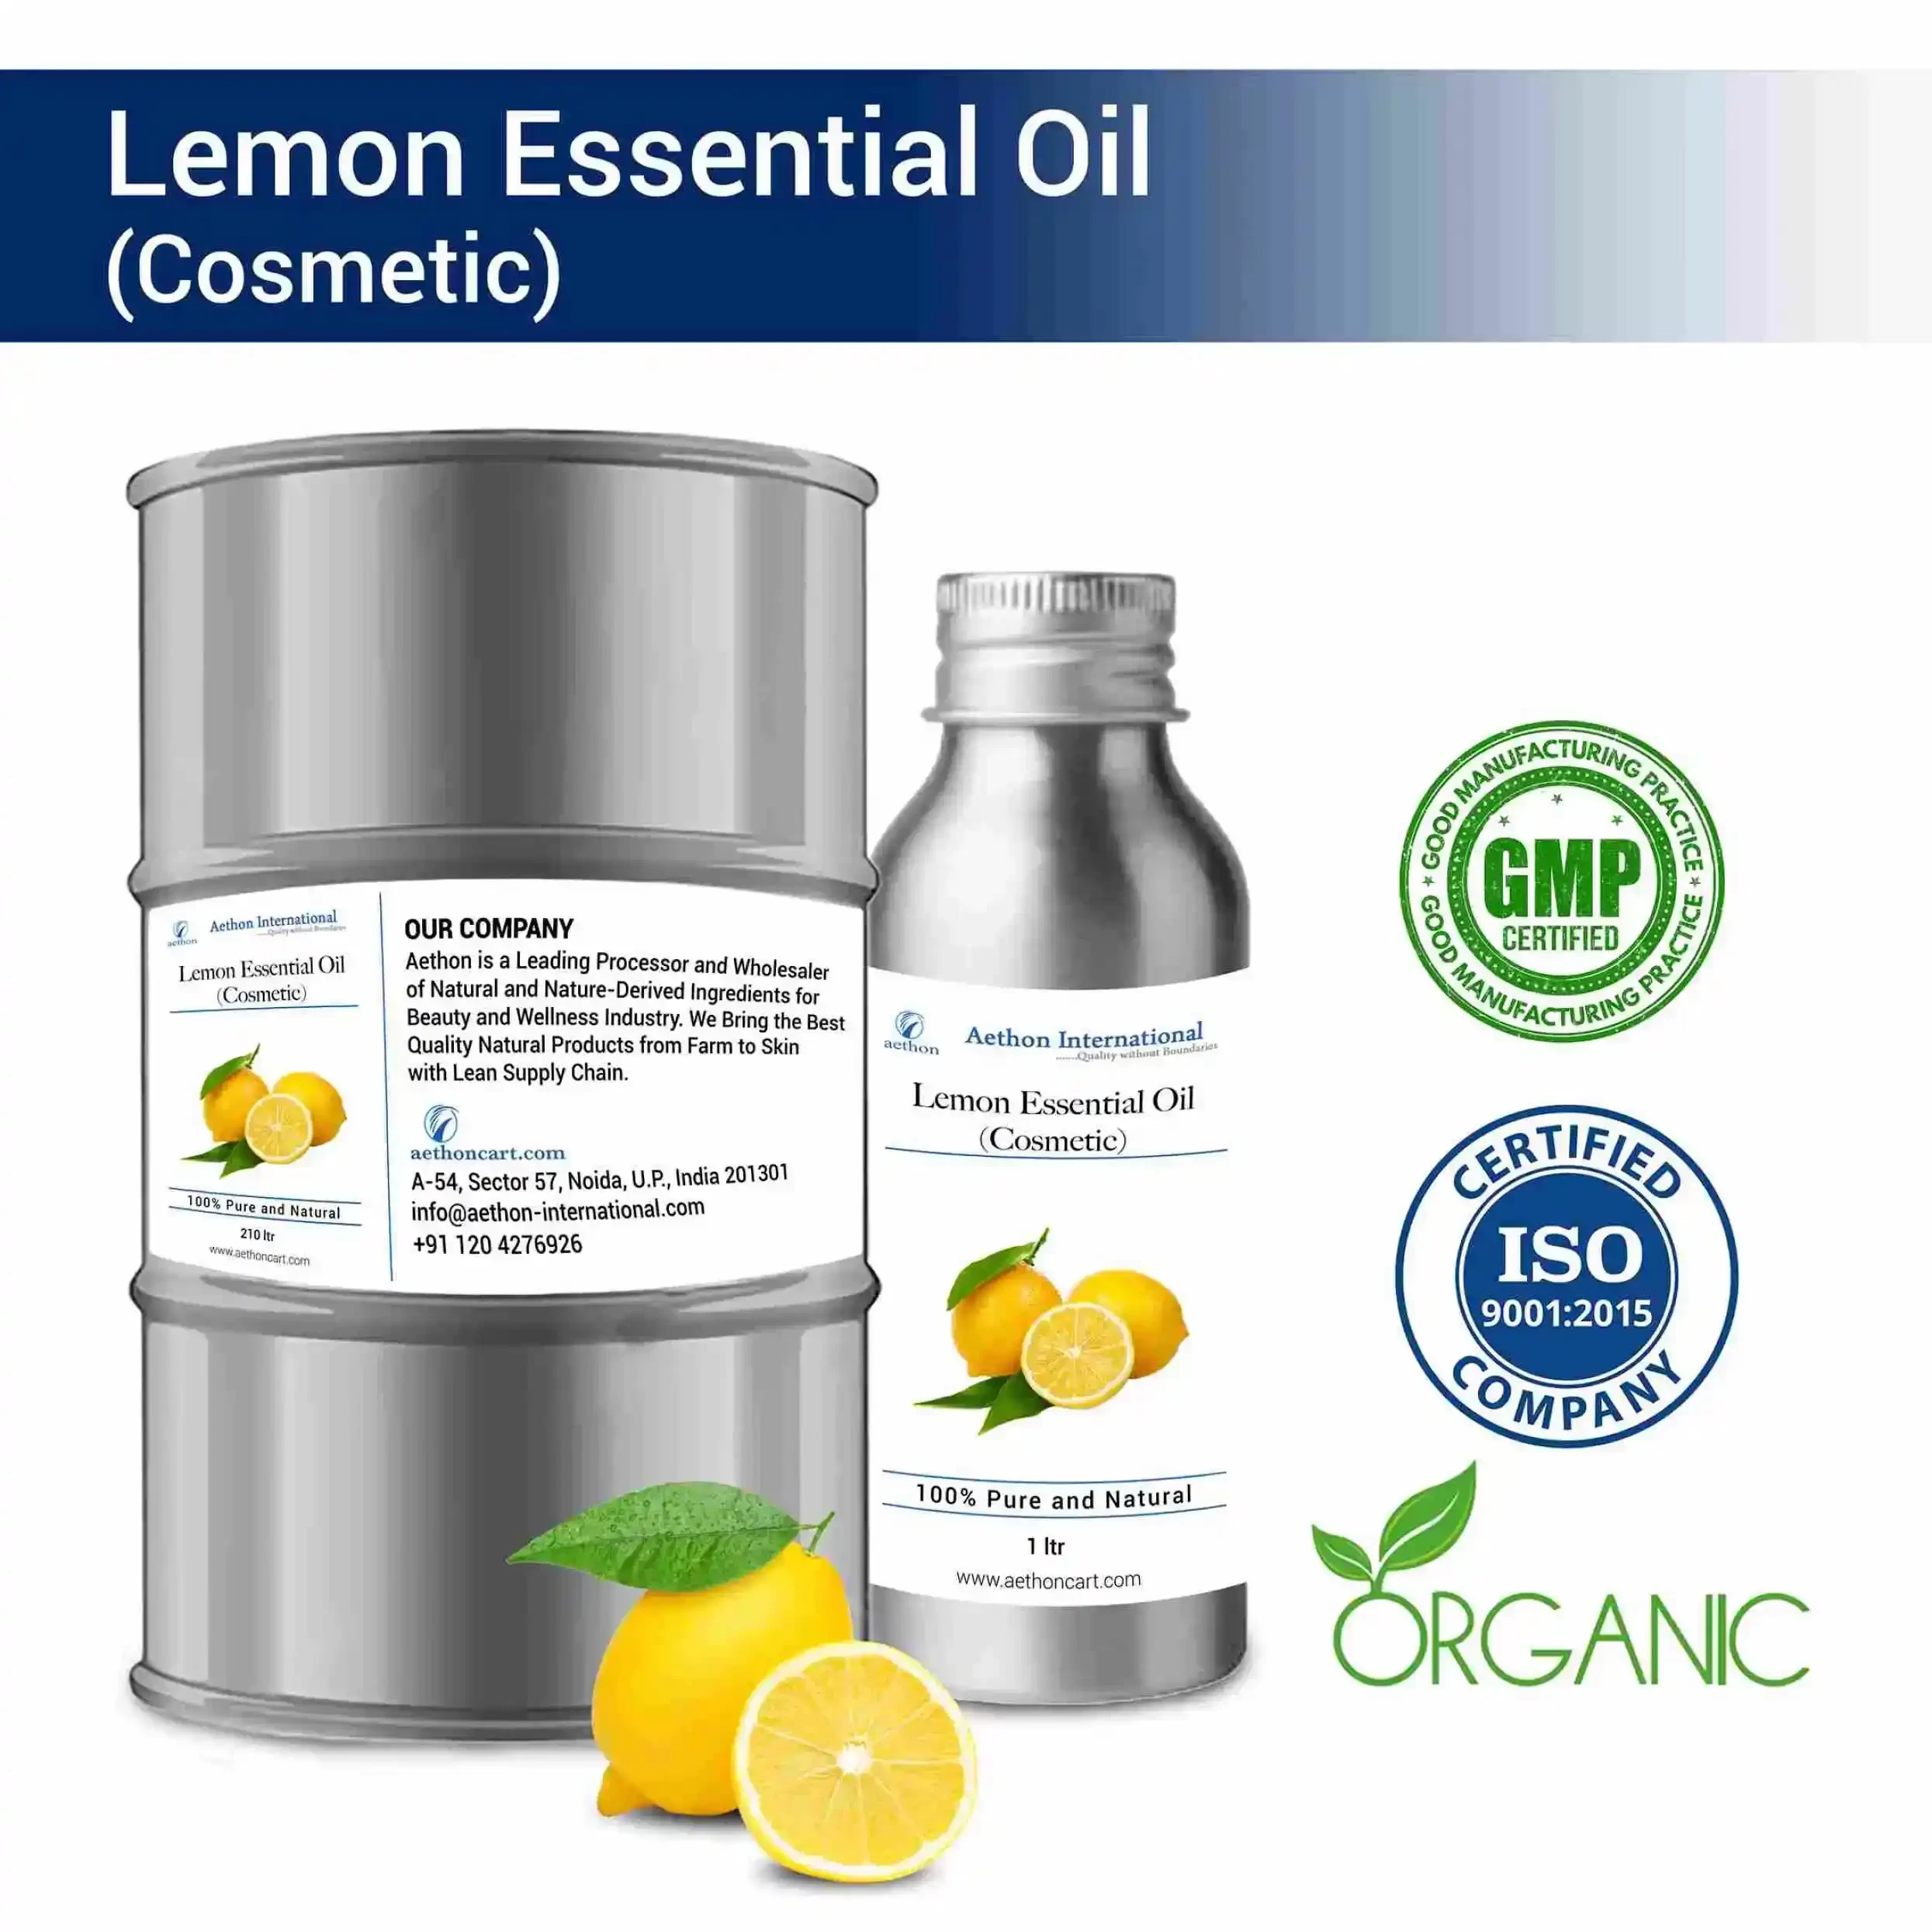 Lemon Essential Oil (Cosmetic)